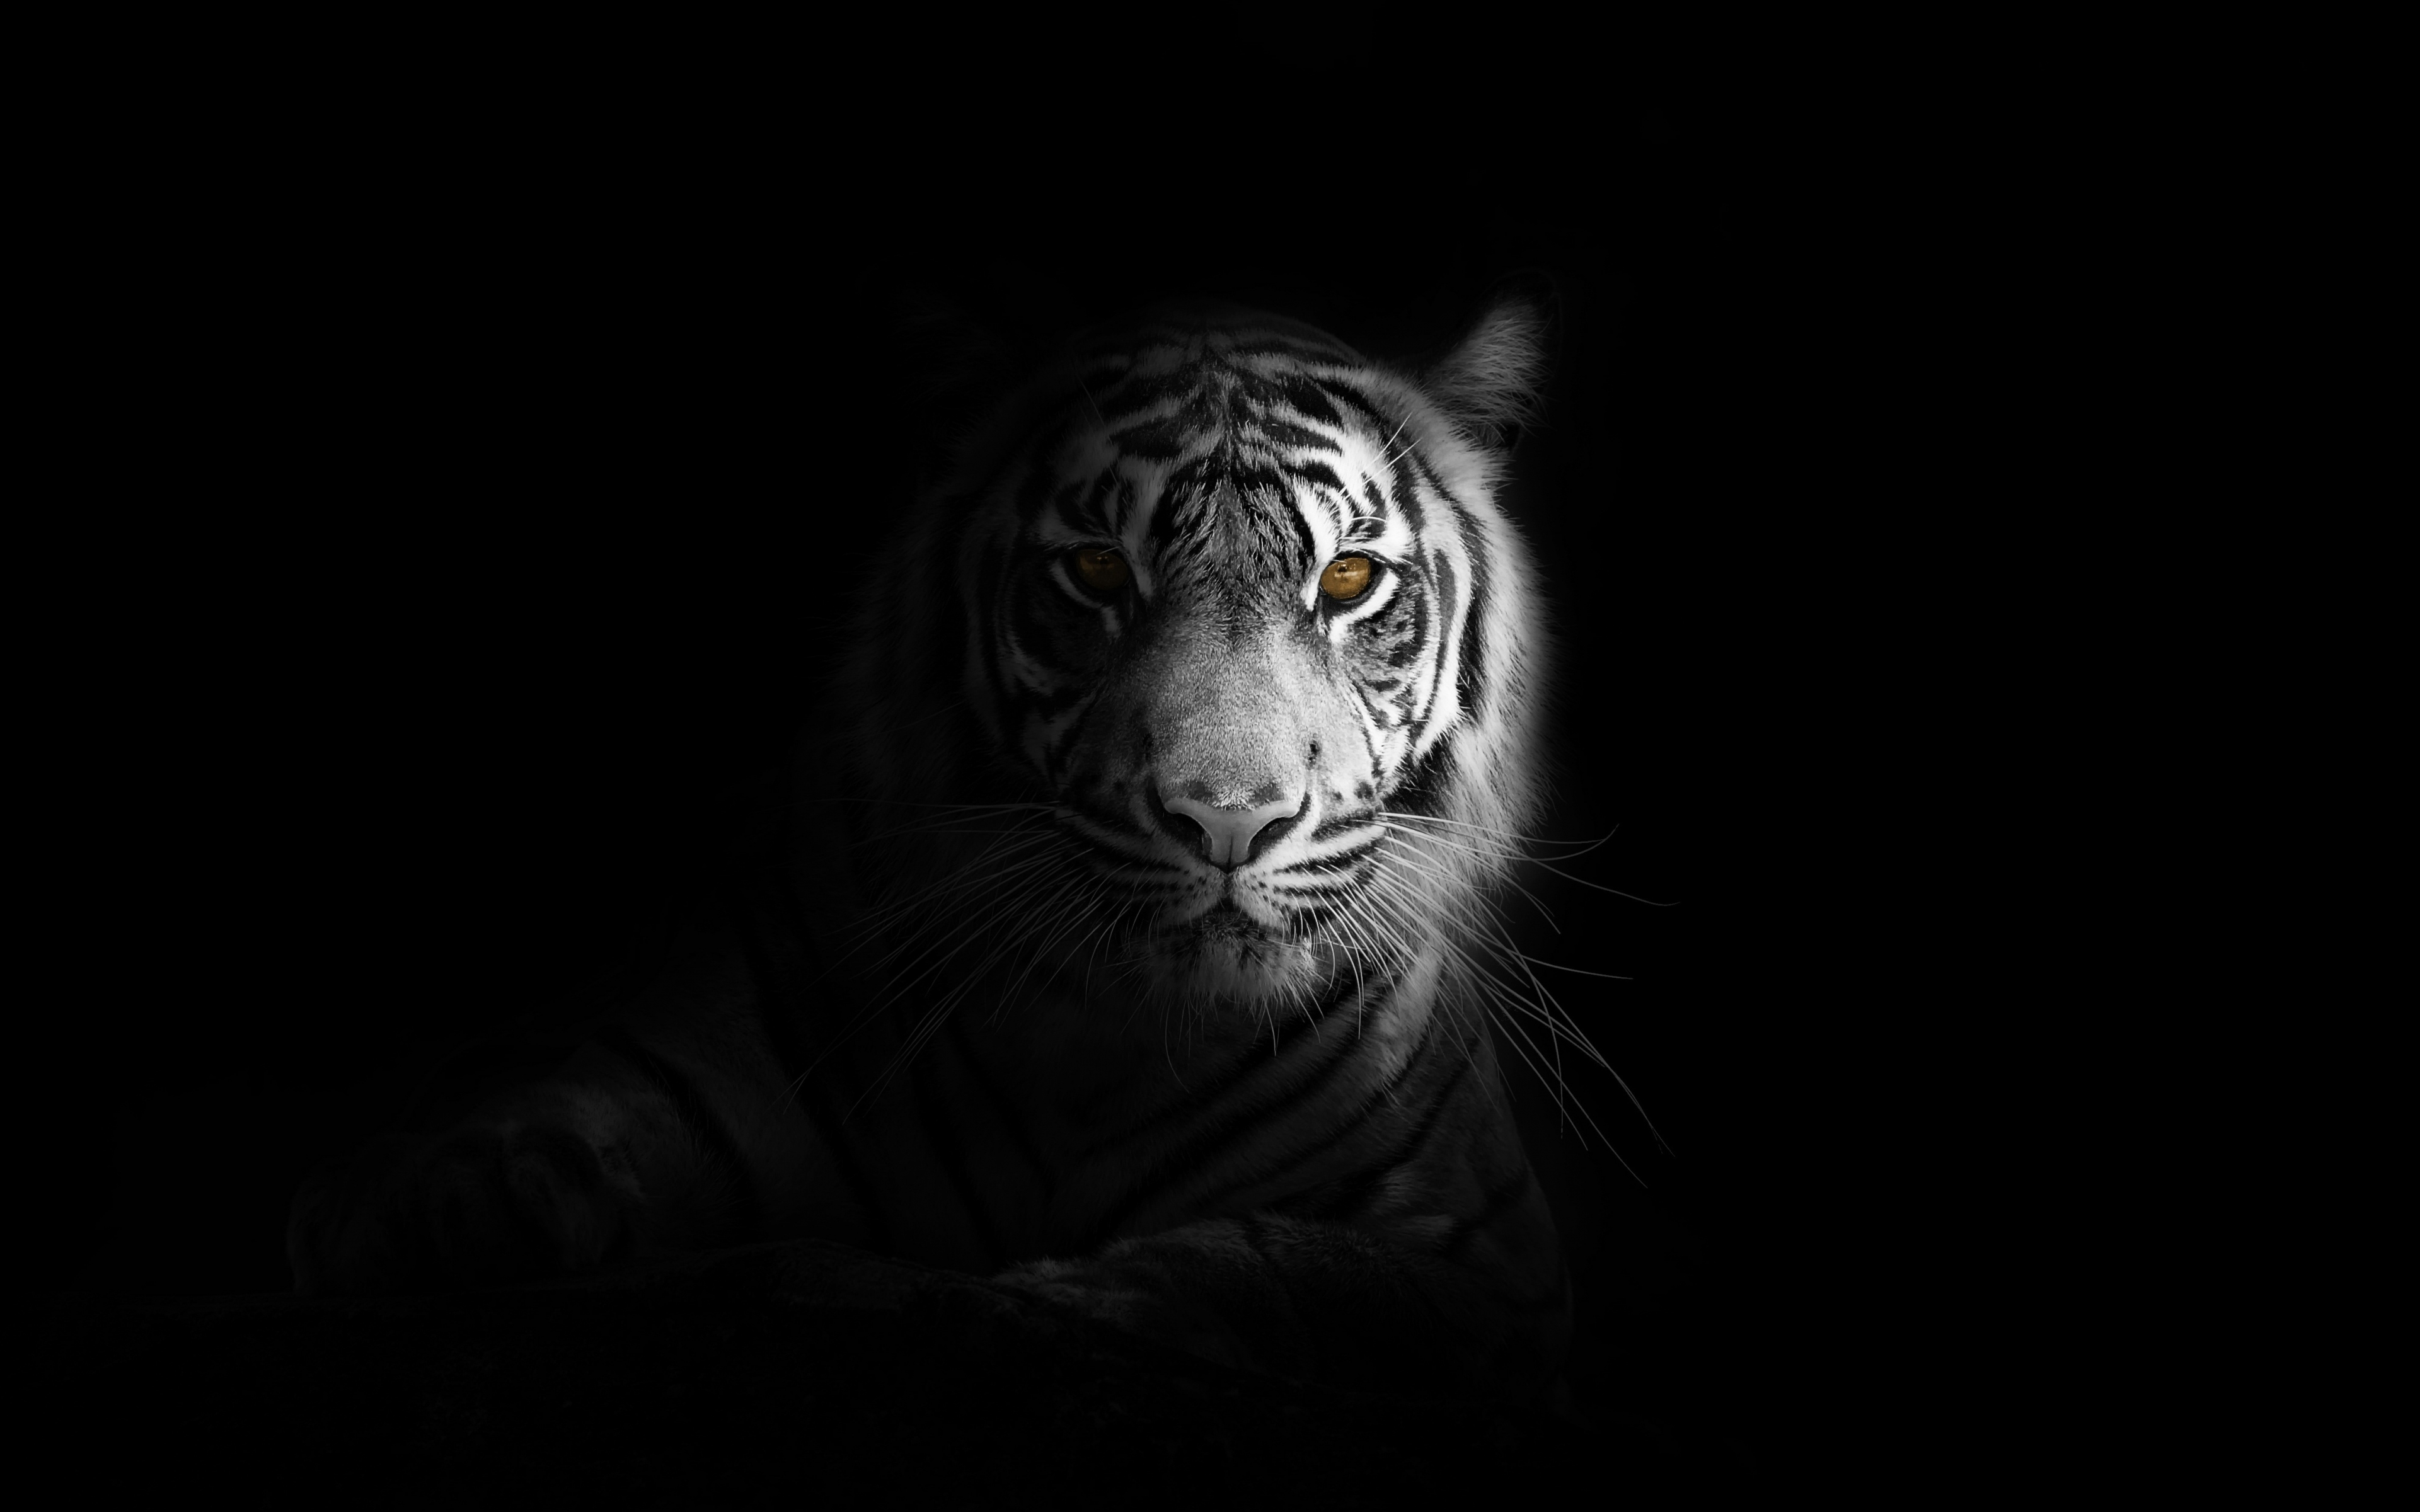 Download wallpaper 3840x2400 portrait, minimal, white tiger, dark 4k  wallaper, 4k ultra hd 16:10 wallpaper, 3840x2400 hd background, 20868